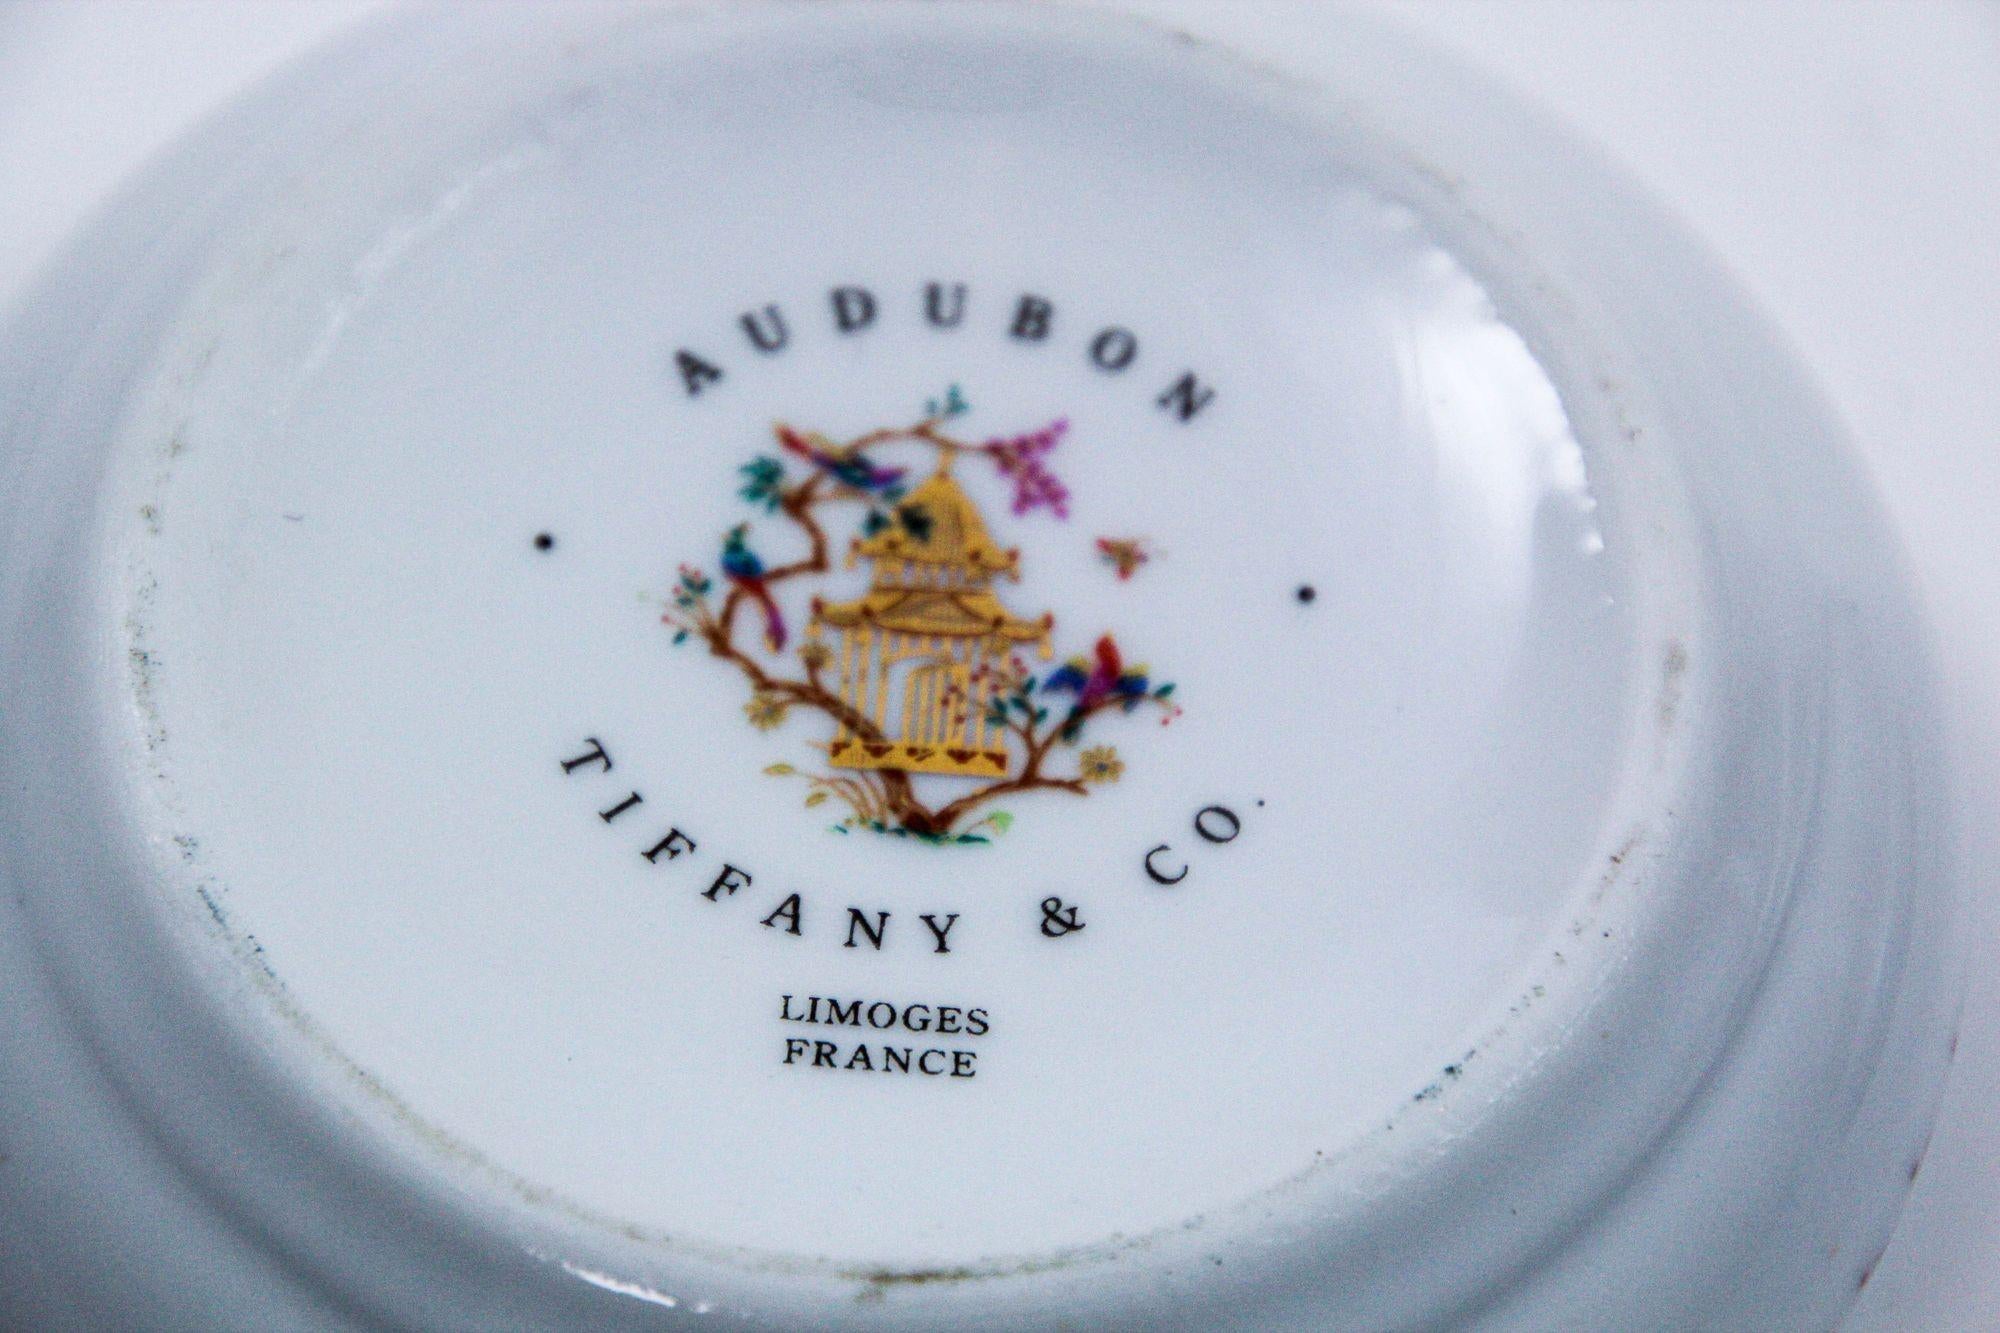 Audubon by TIFFANY & Co Limoges Porcelain Vanity Trinket Box Chinoiserie Decor For Sale 2